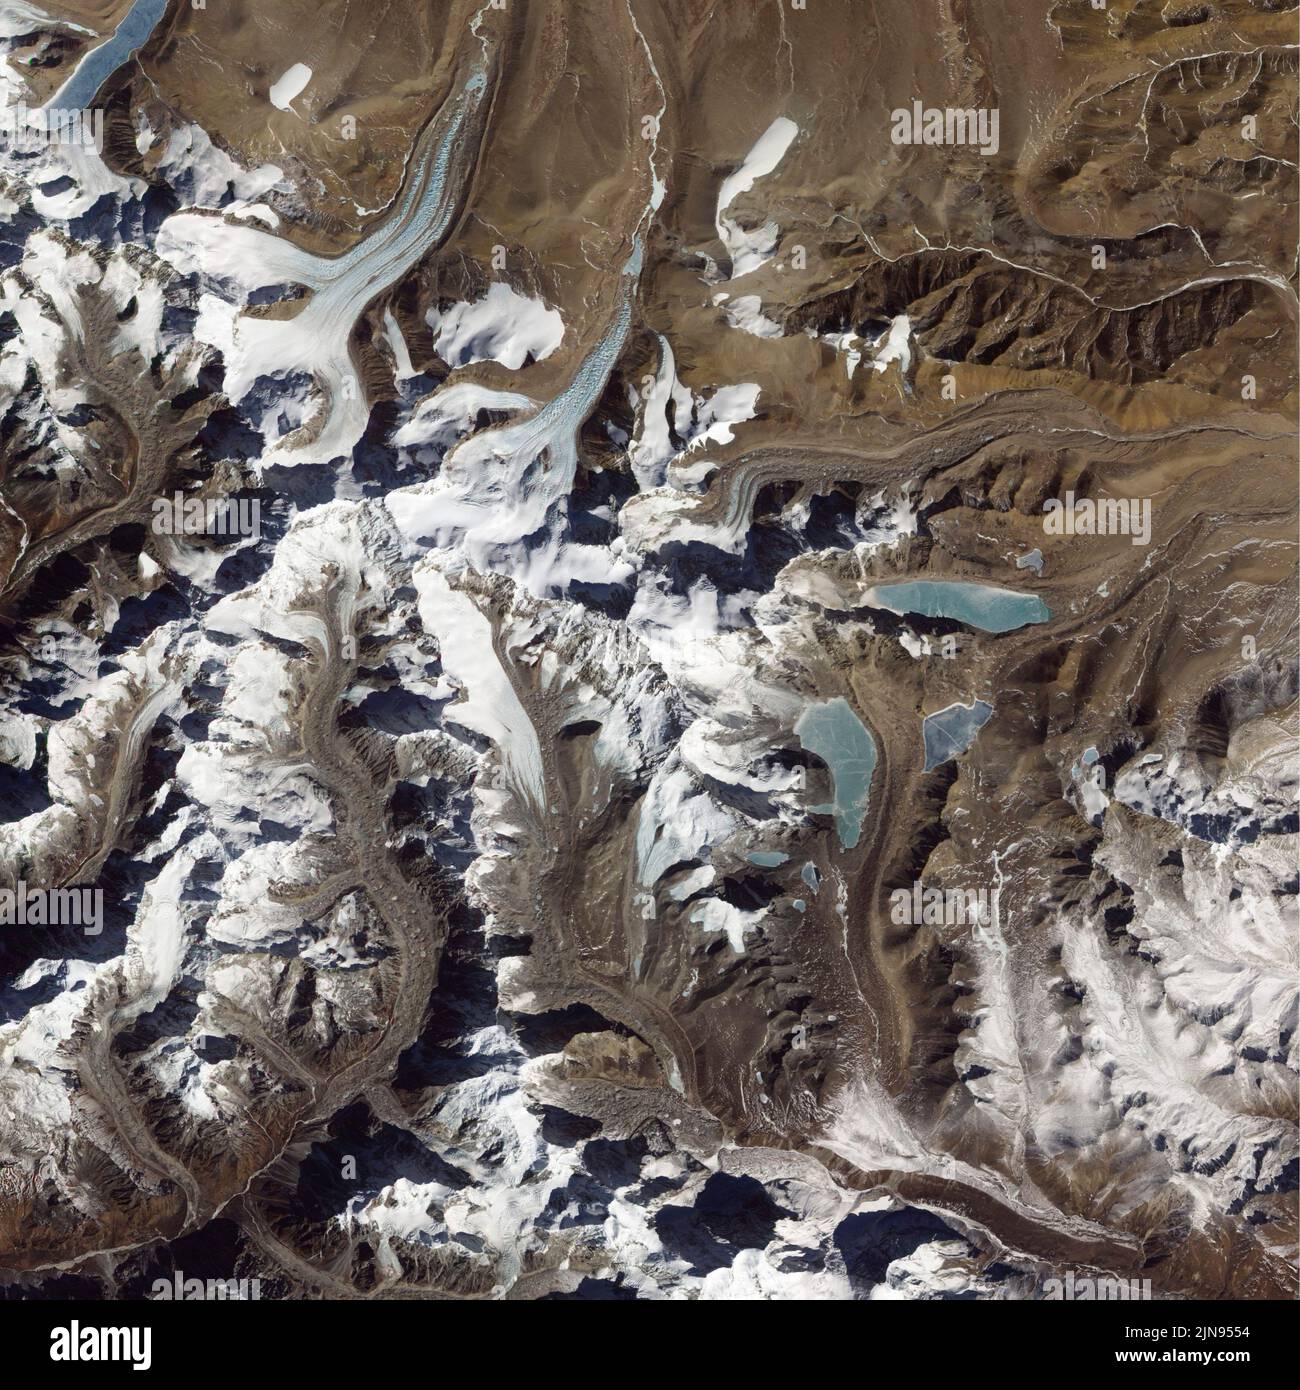 TIBET - 03 February 2011 - Satellite image of Mount Shishapangma in Tibet - one of eight peaks over 8000 metres - Photo: Geopix/NASA Stock Photo